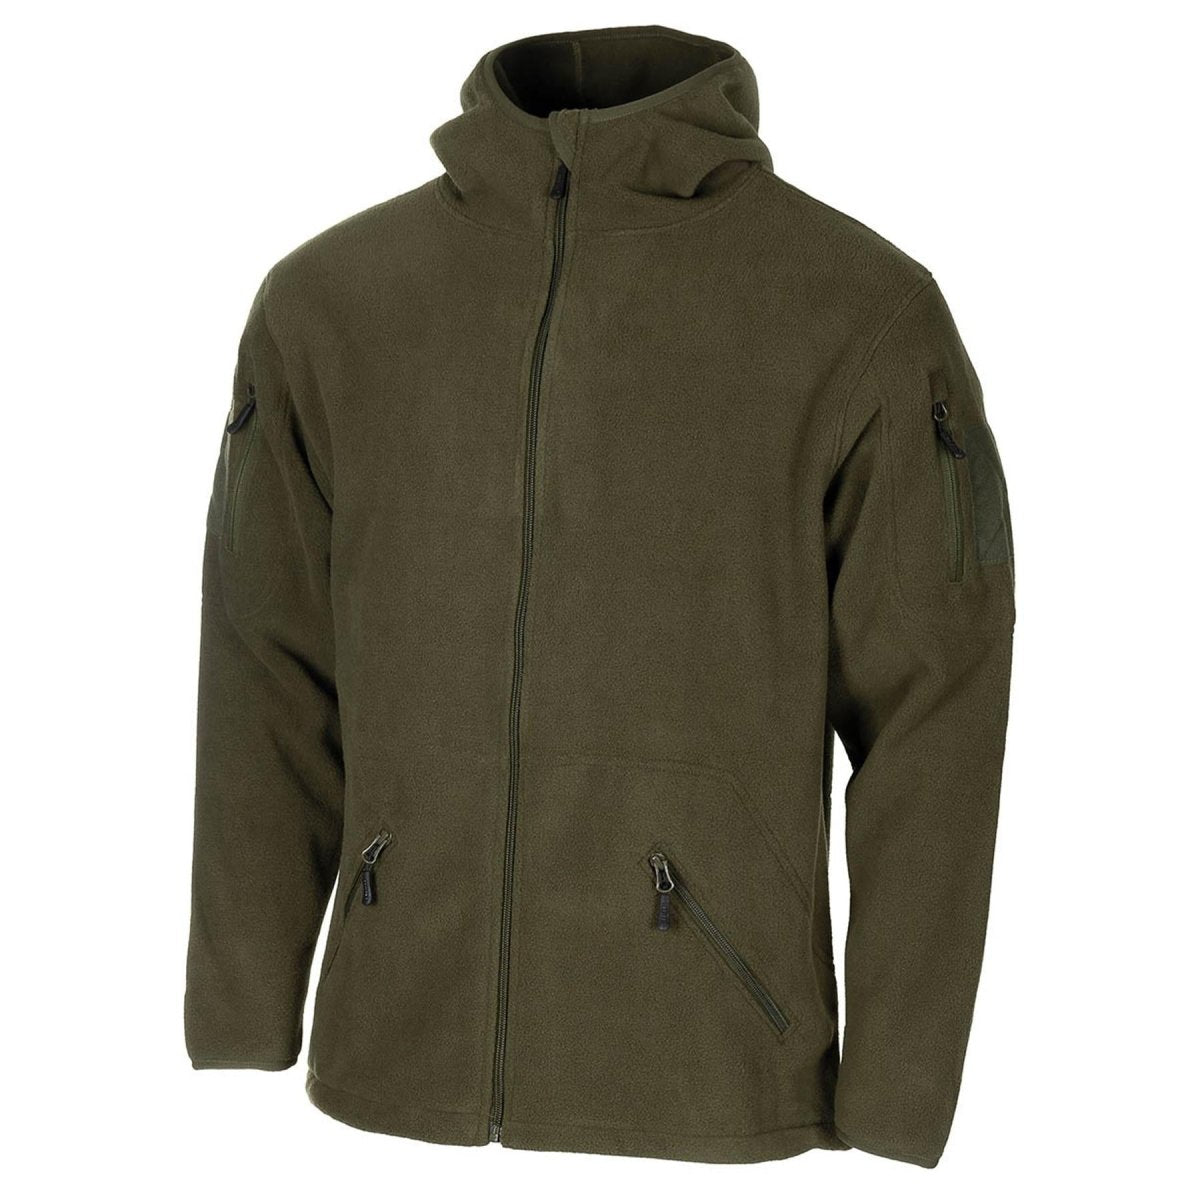 Shop Army Fleece Jacket